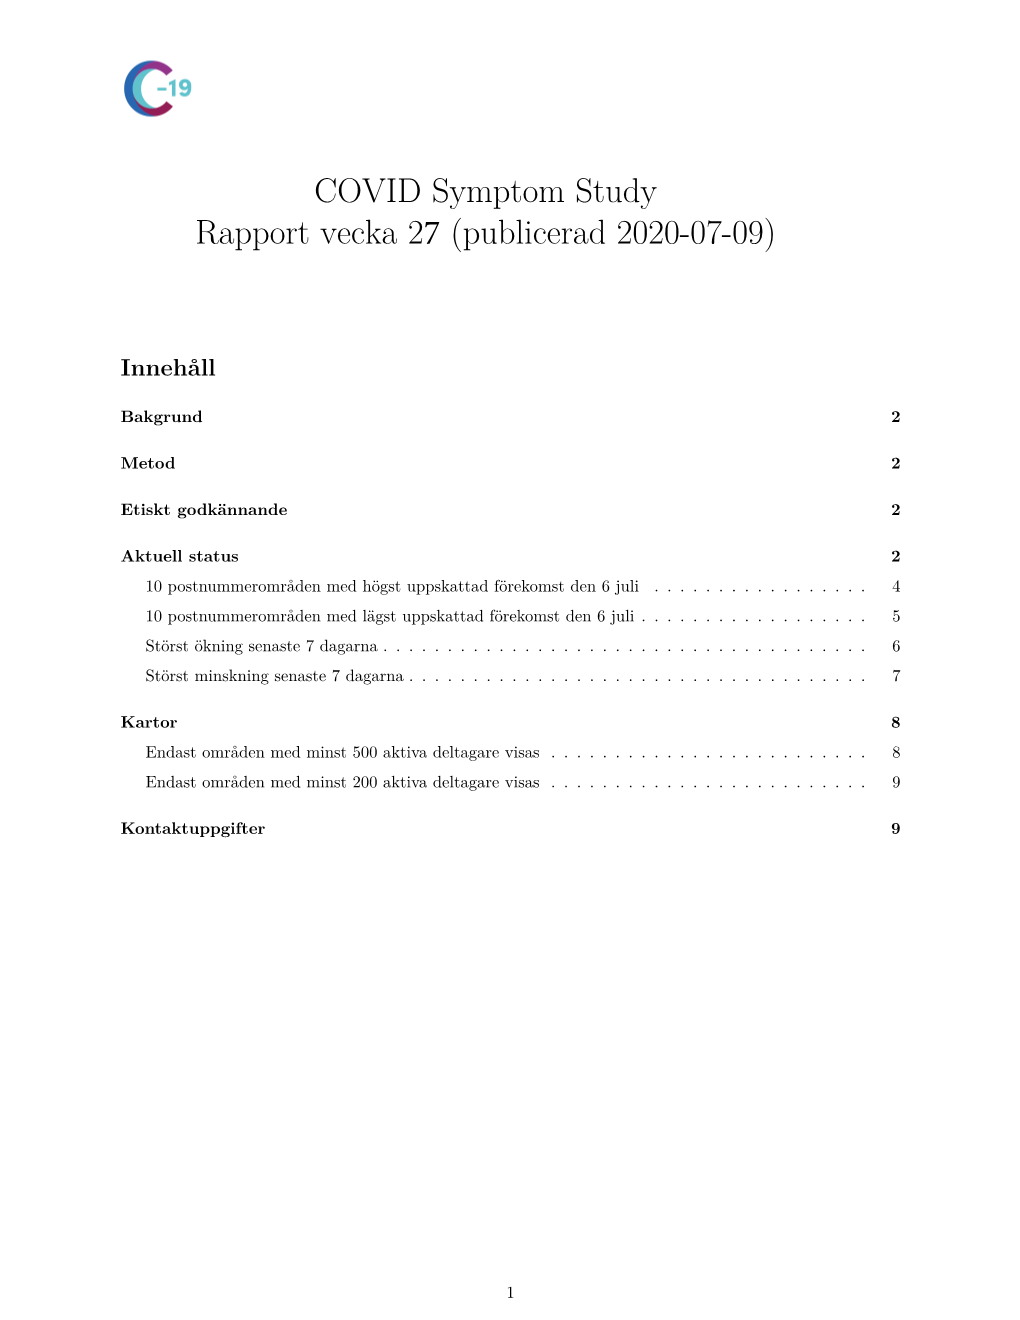 COVID Symptom Study Rapport Vecka 27 (Publicerad 2020-07-09)